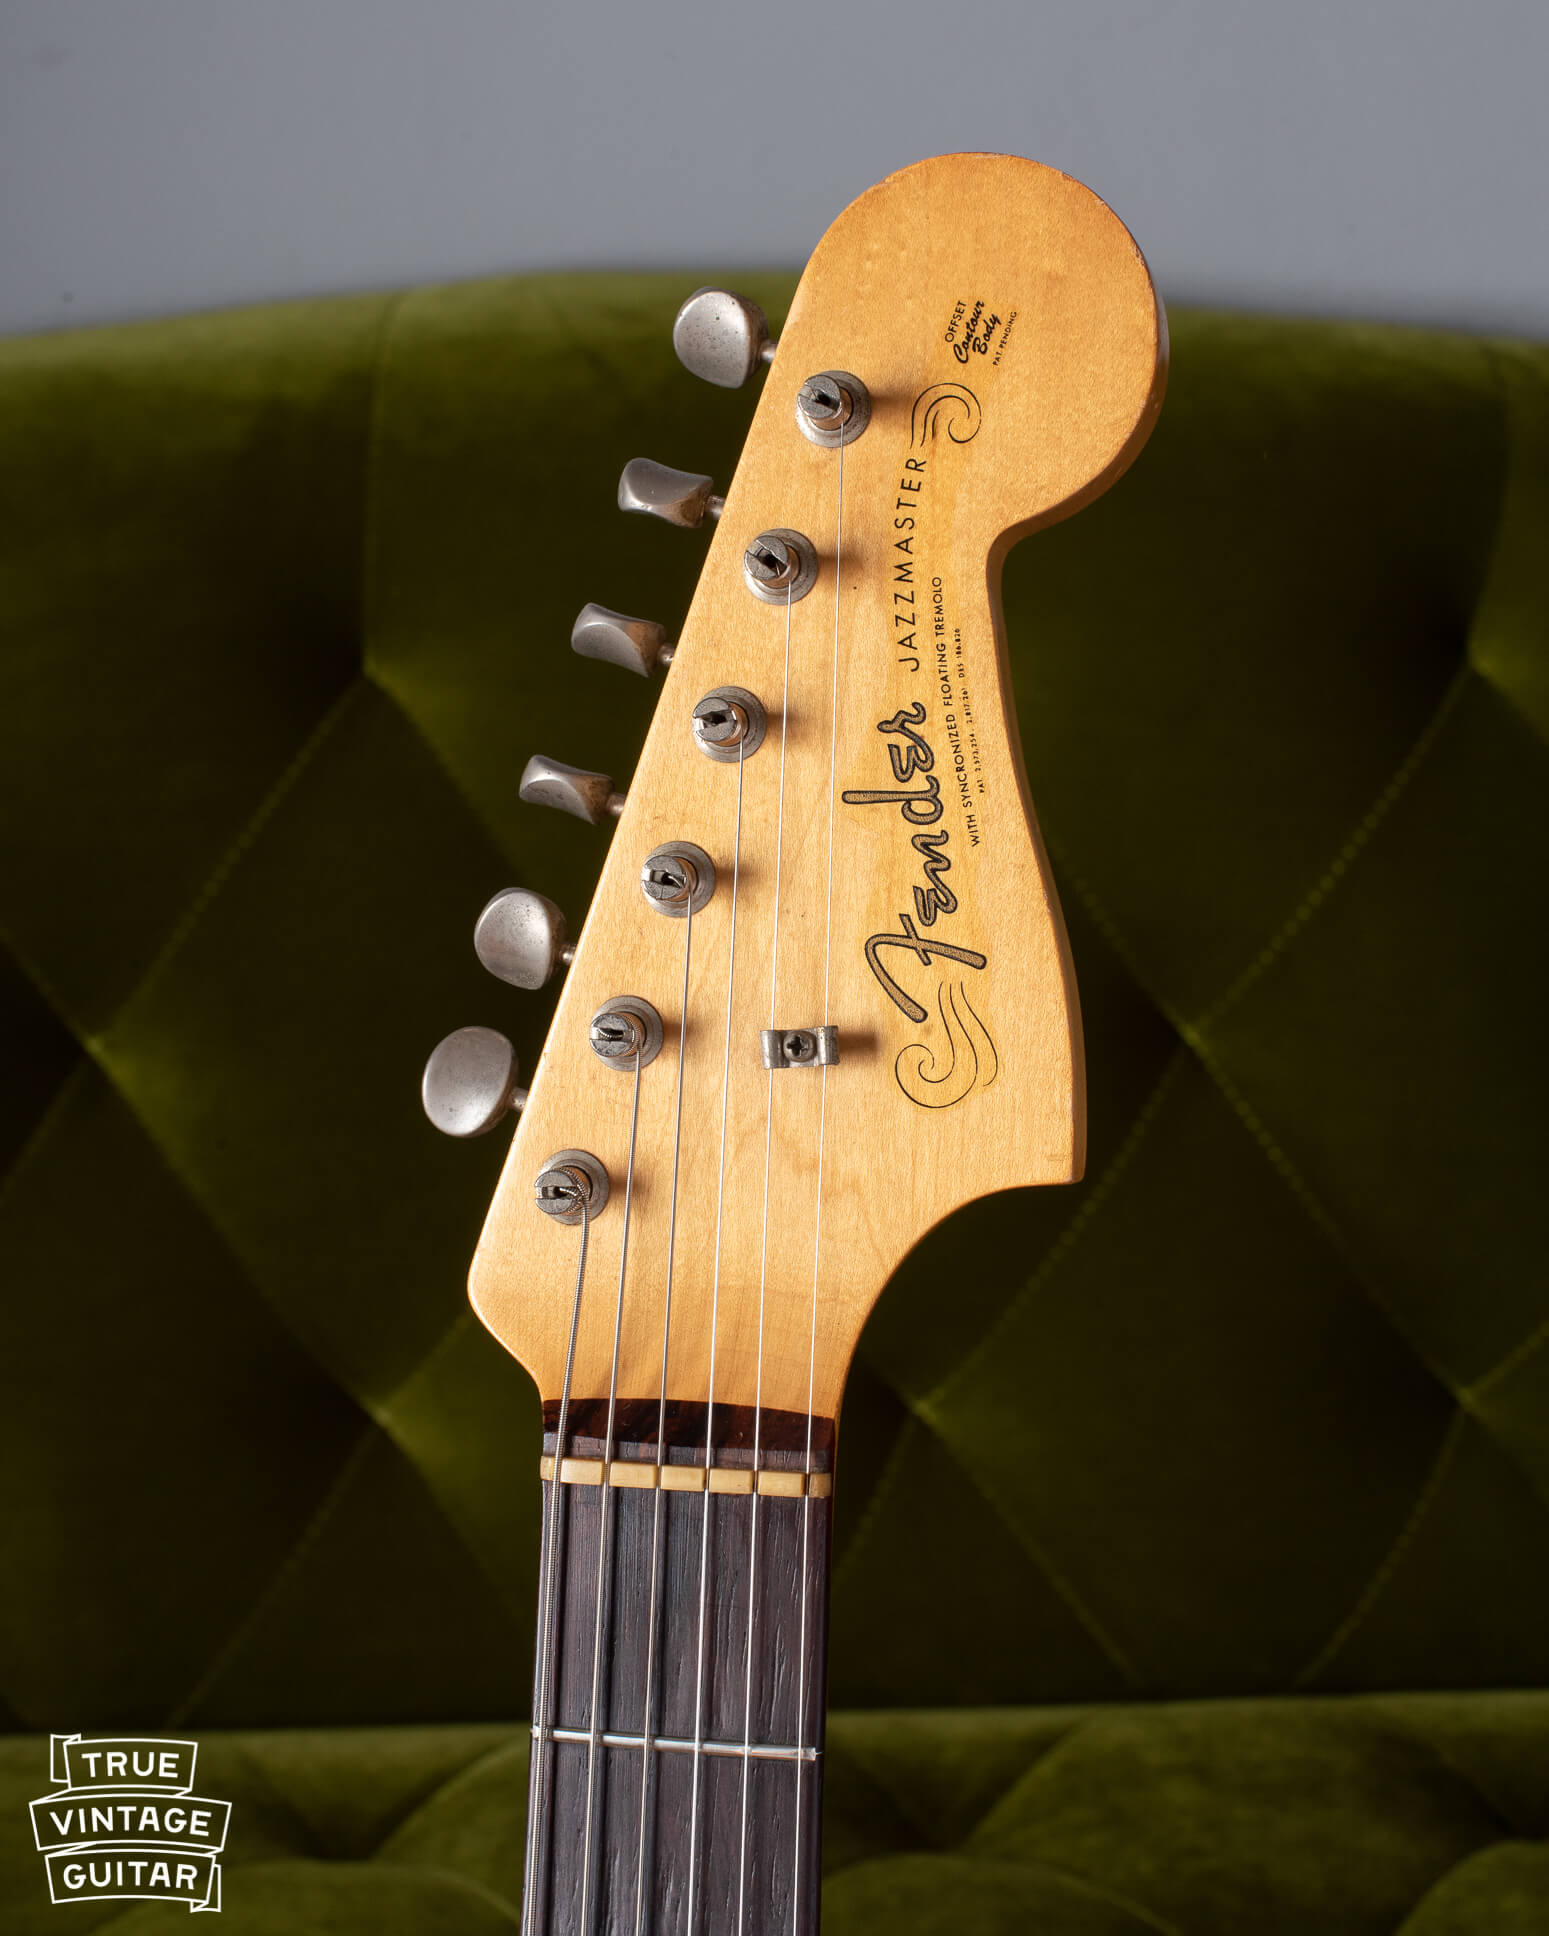 Fender Jazzmaster 1961 neck with slab fretboard